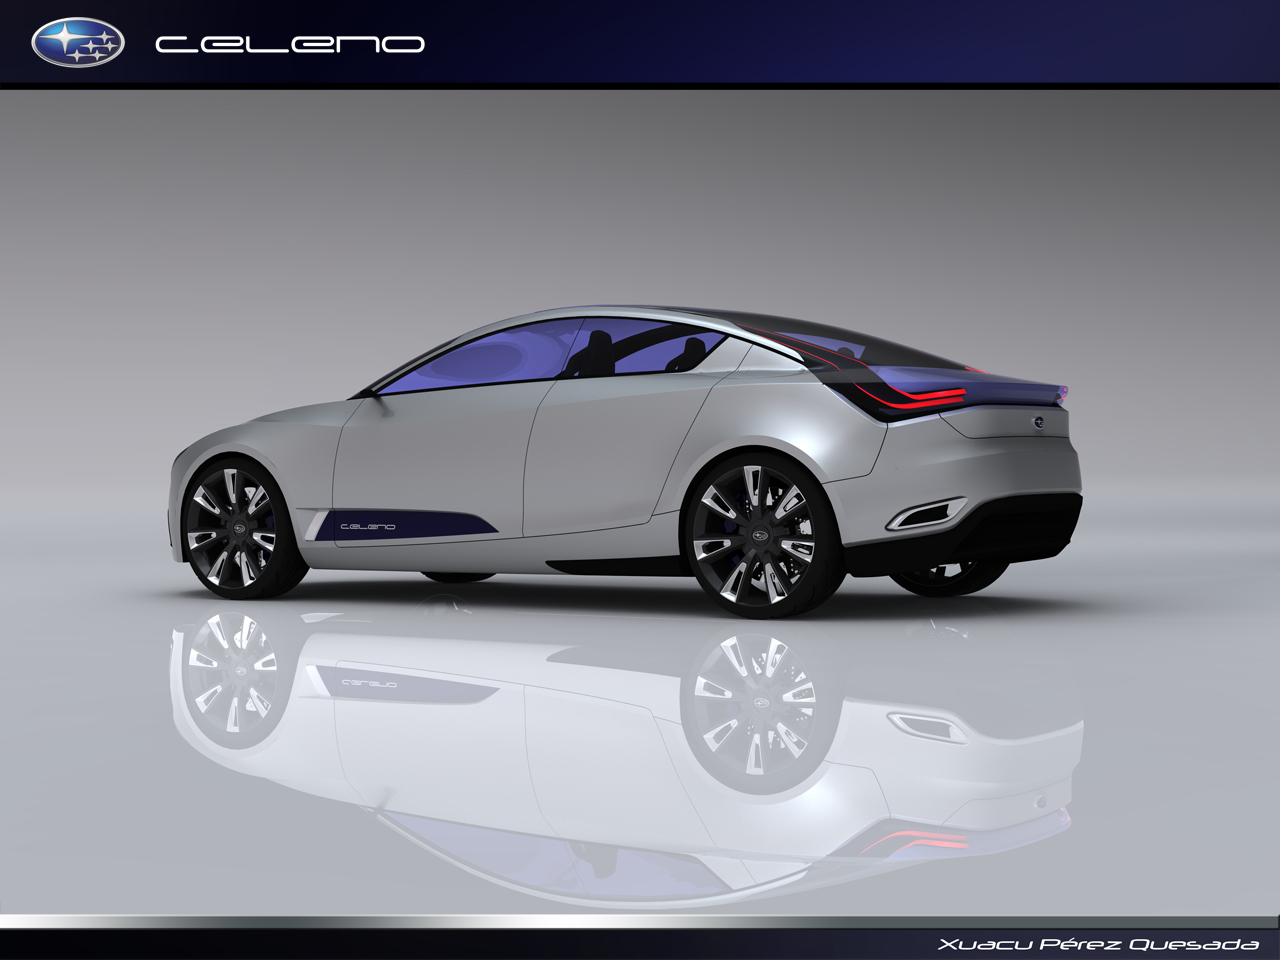 Subaru Celeno concept